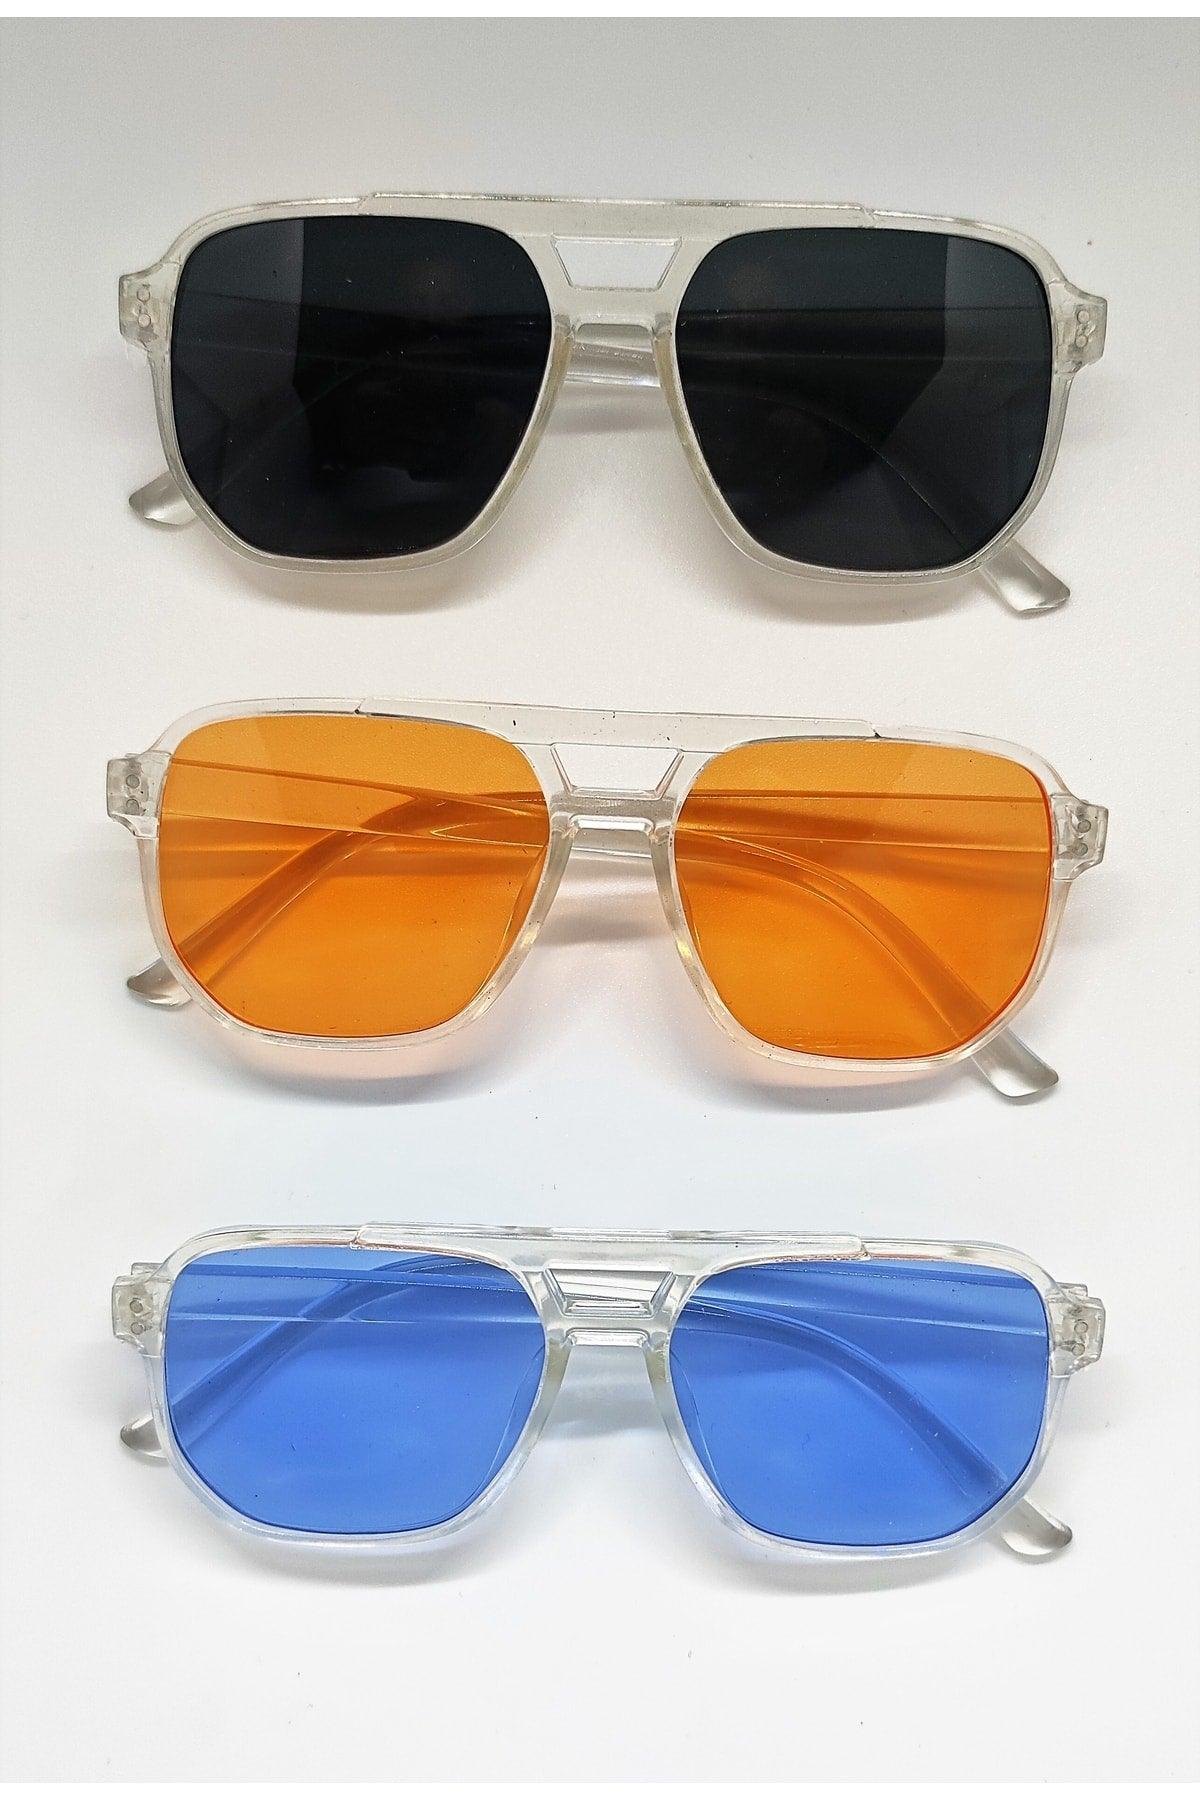 Sergio New Season Sunglasses Set of 3 Opportunities - Swordslife